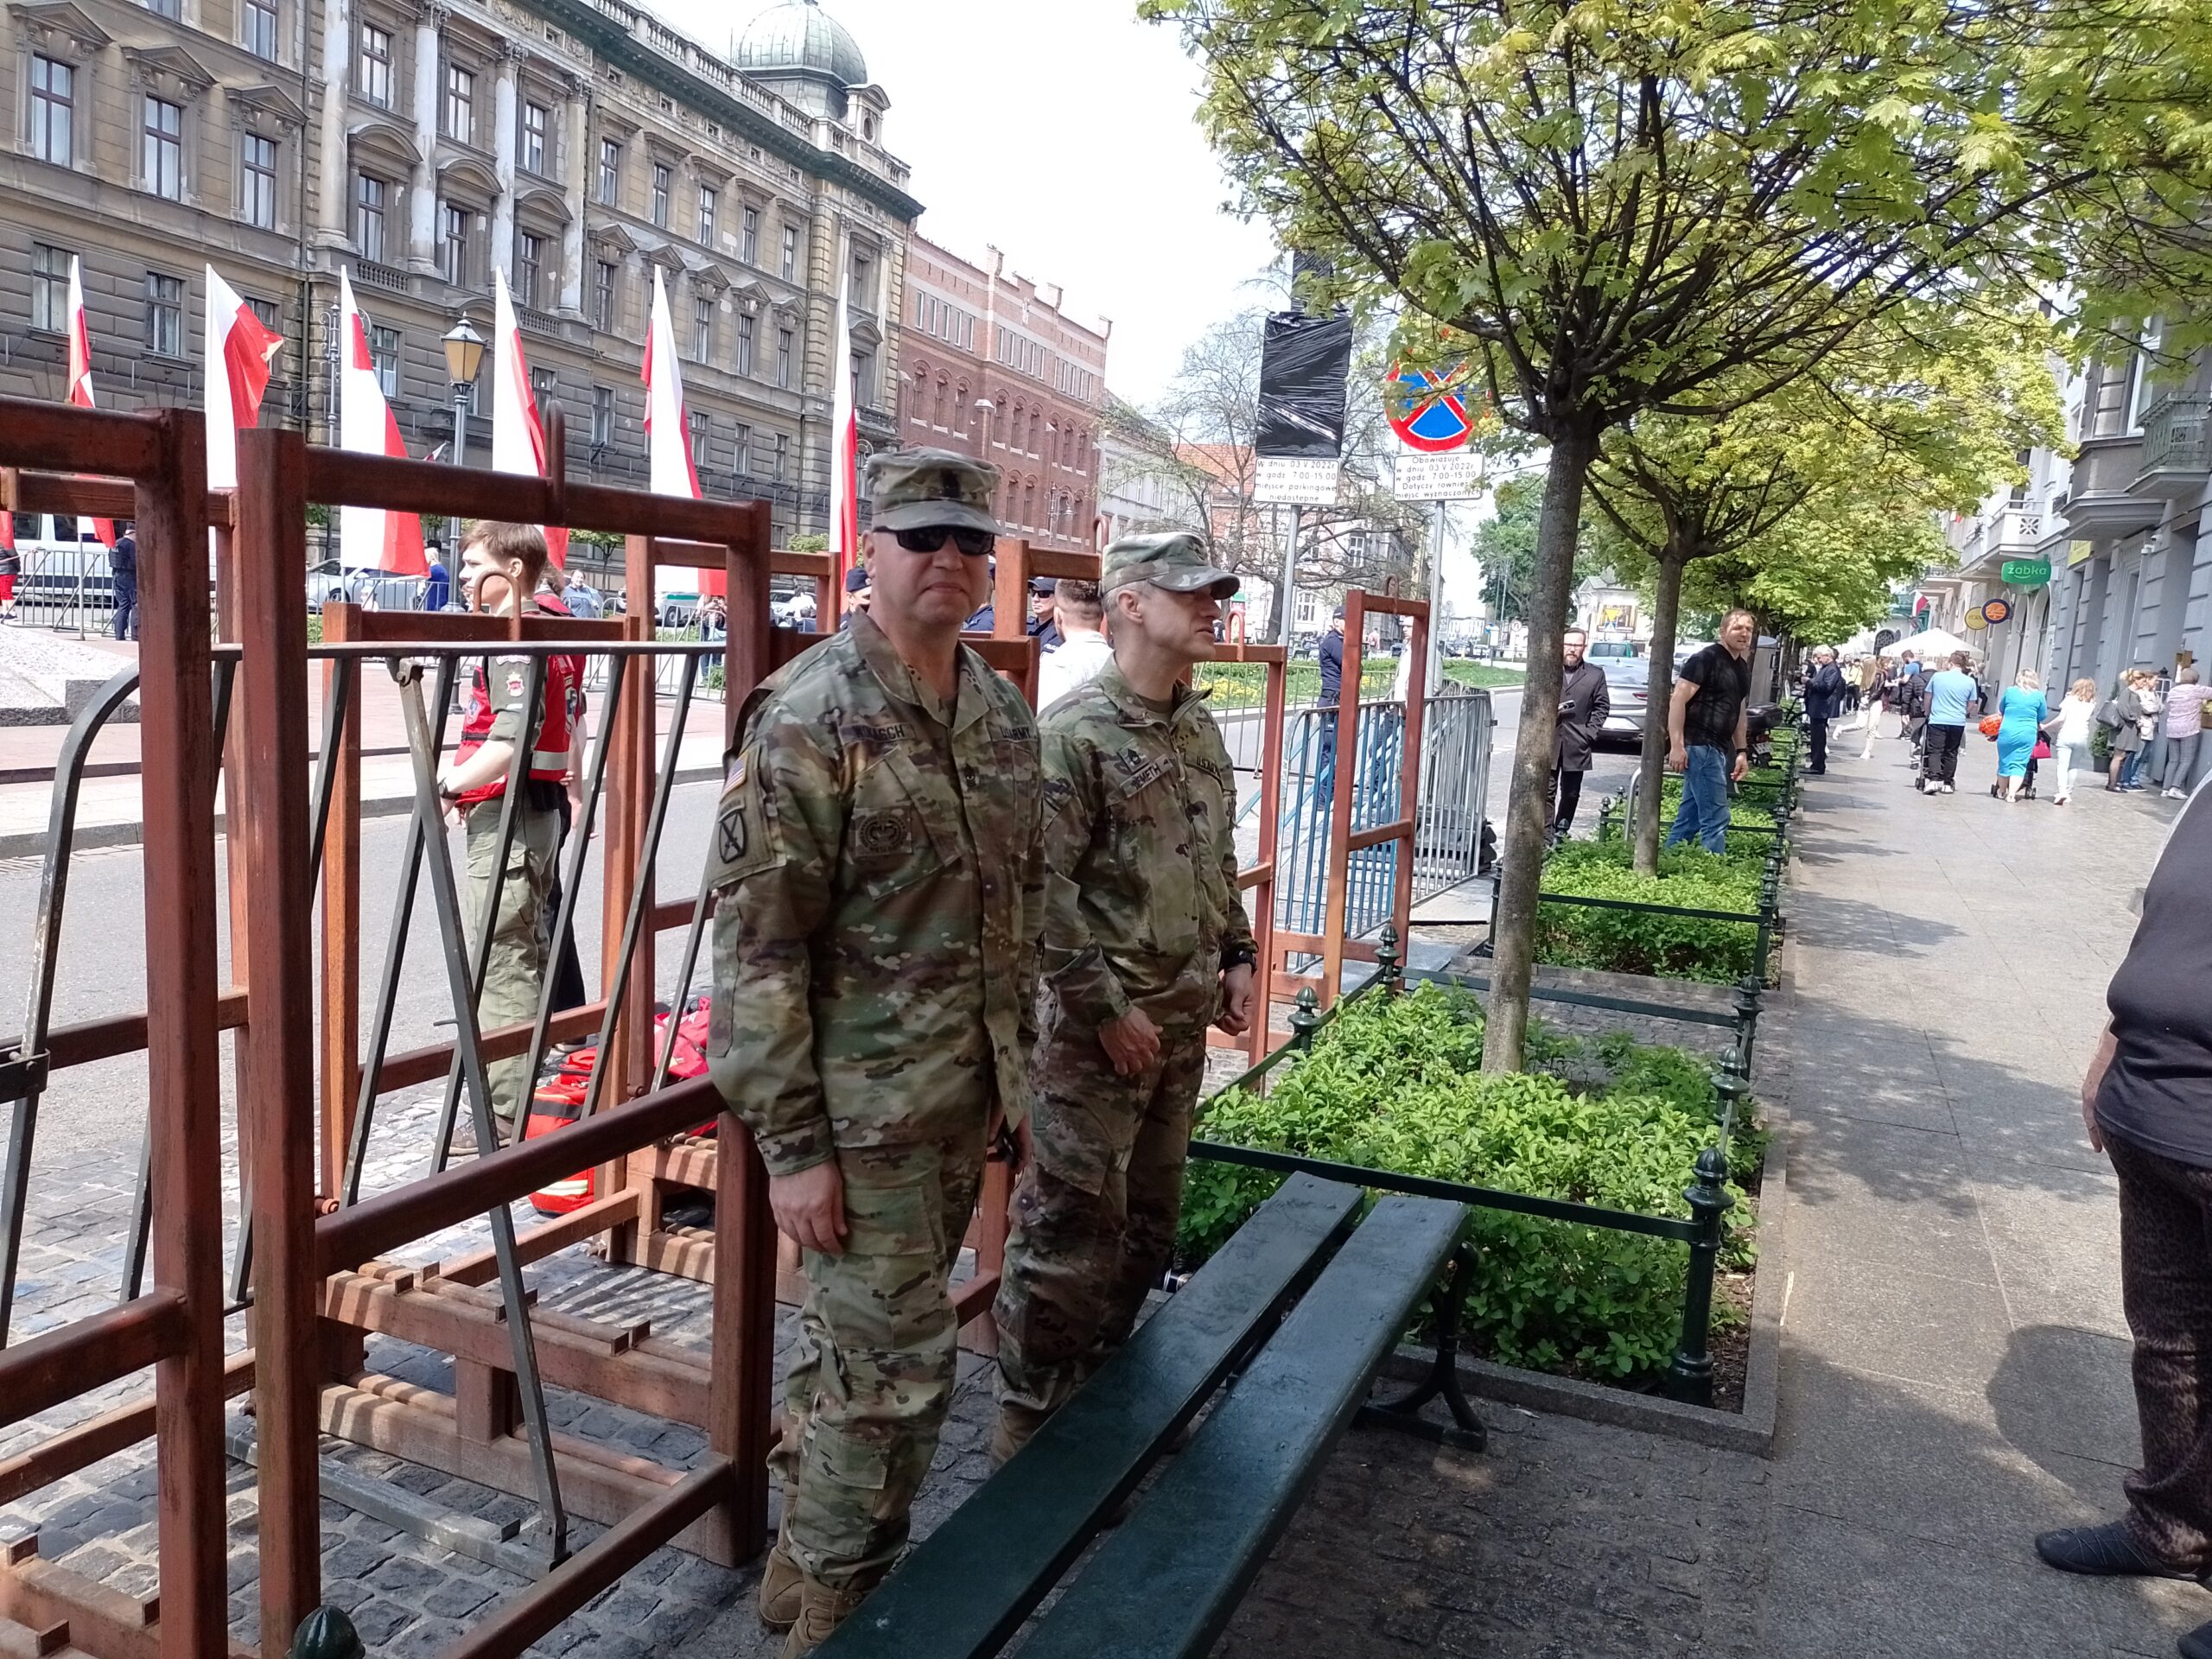 America Army in Poland